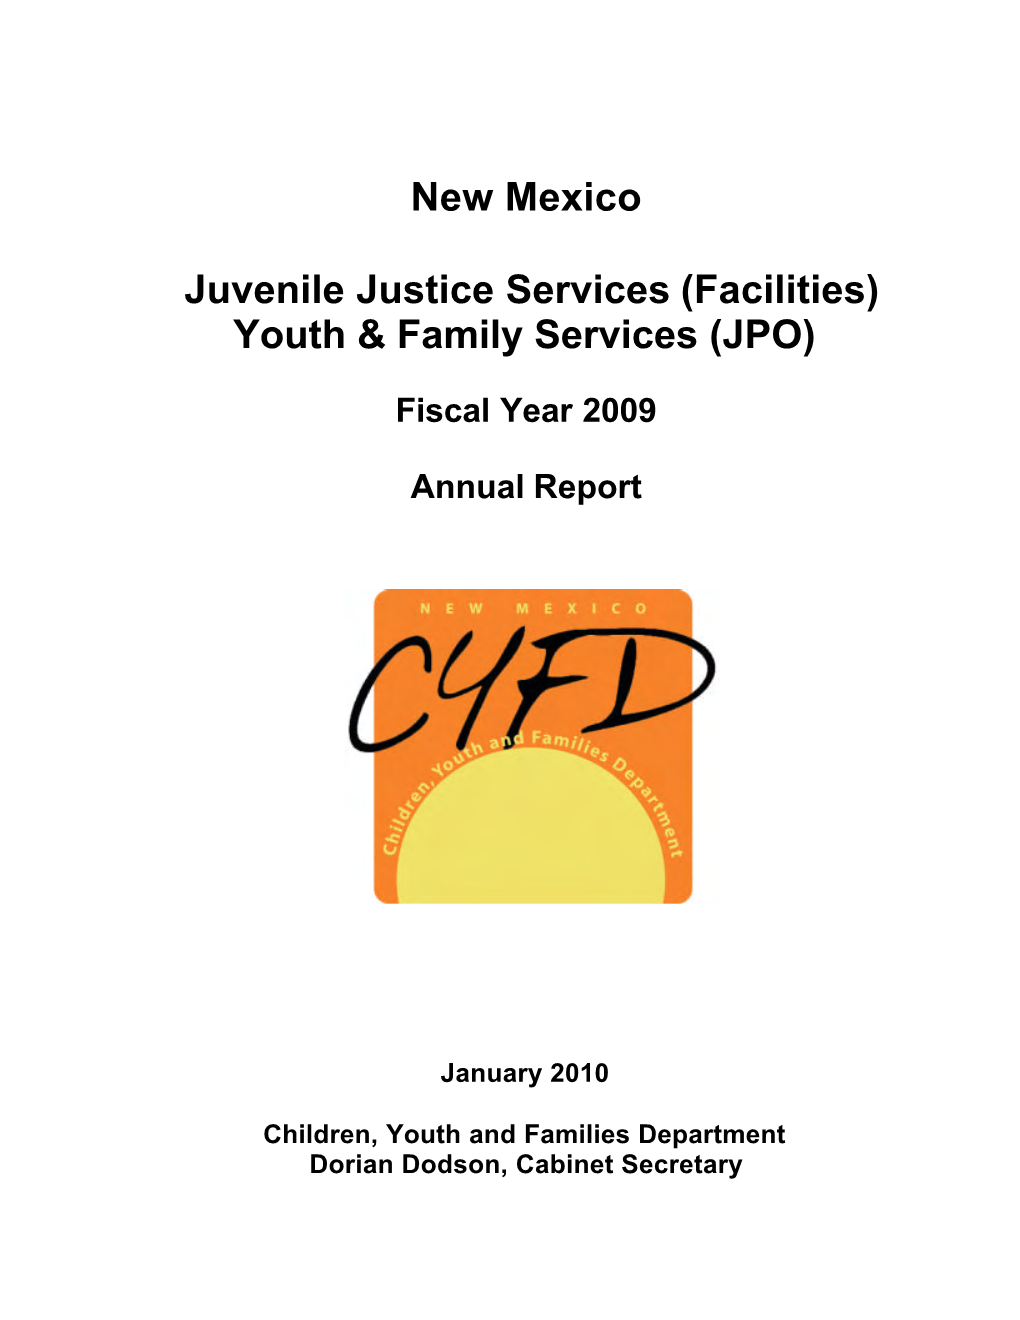 FY09 JJS Annual Report